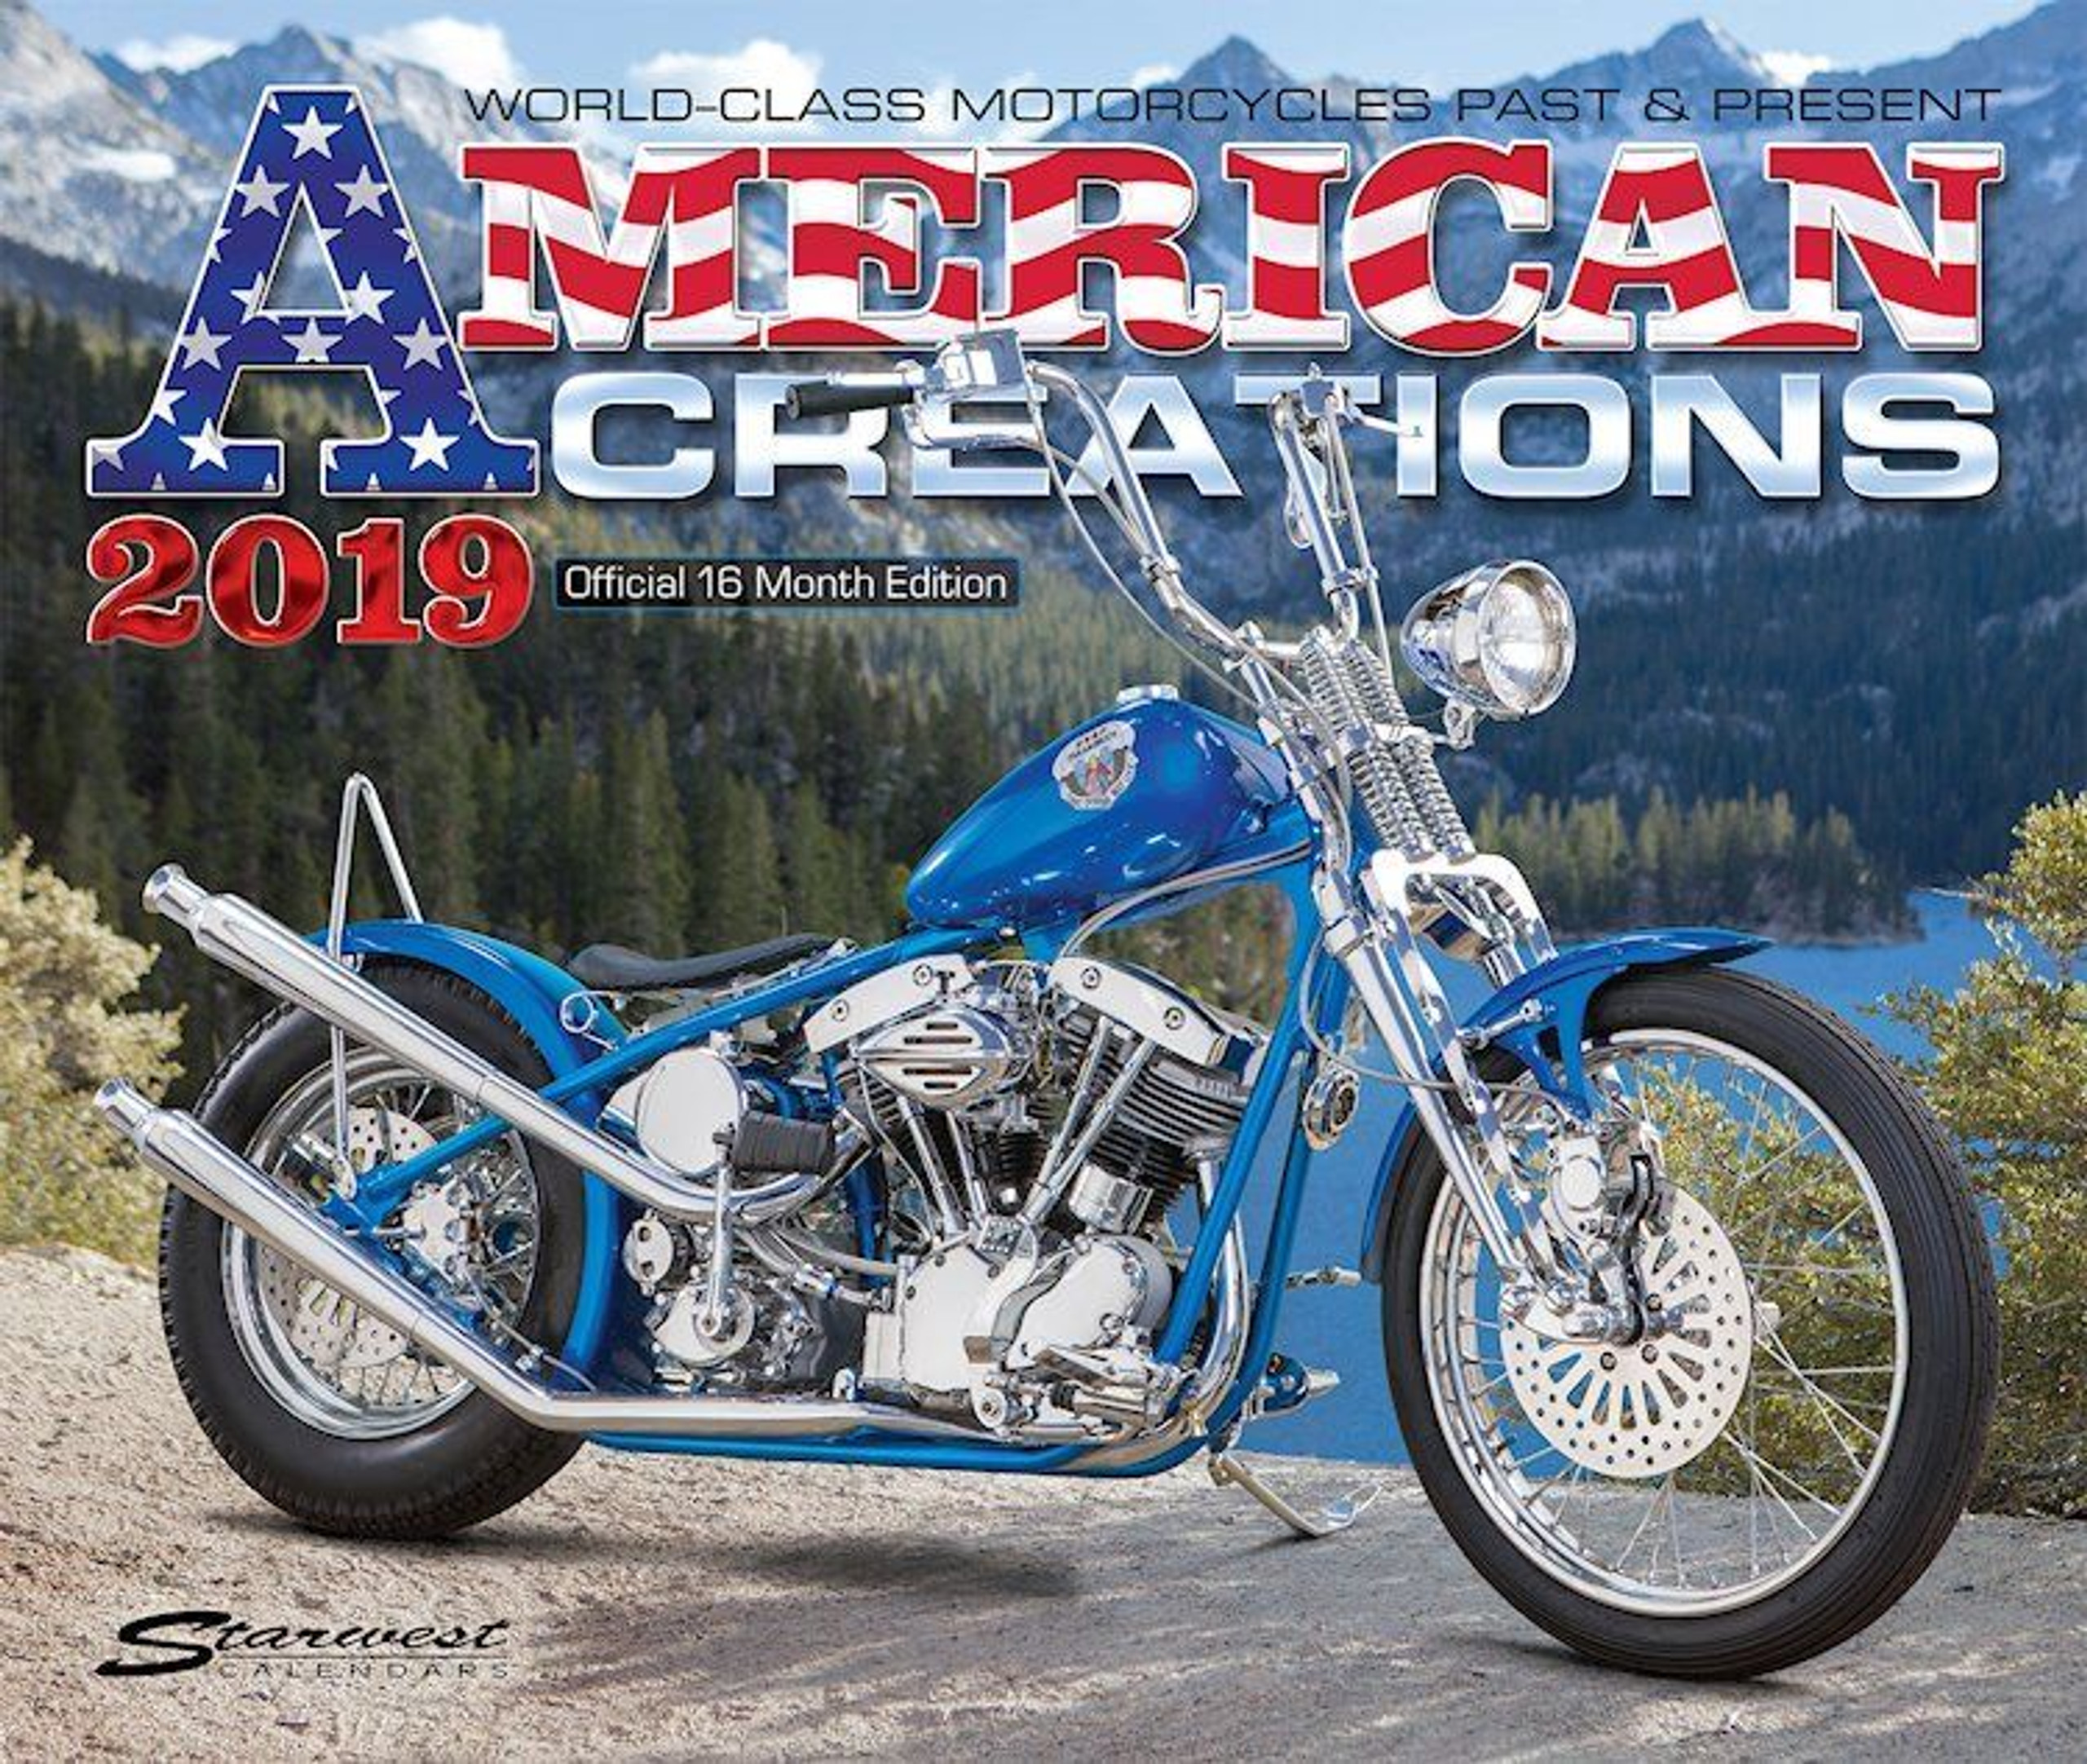 American Creations Wall Calendar 2018 32  24706.1660255391 ?c=1